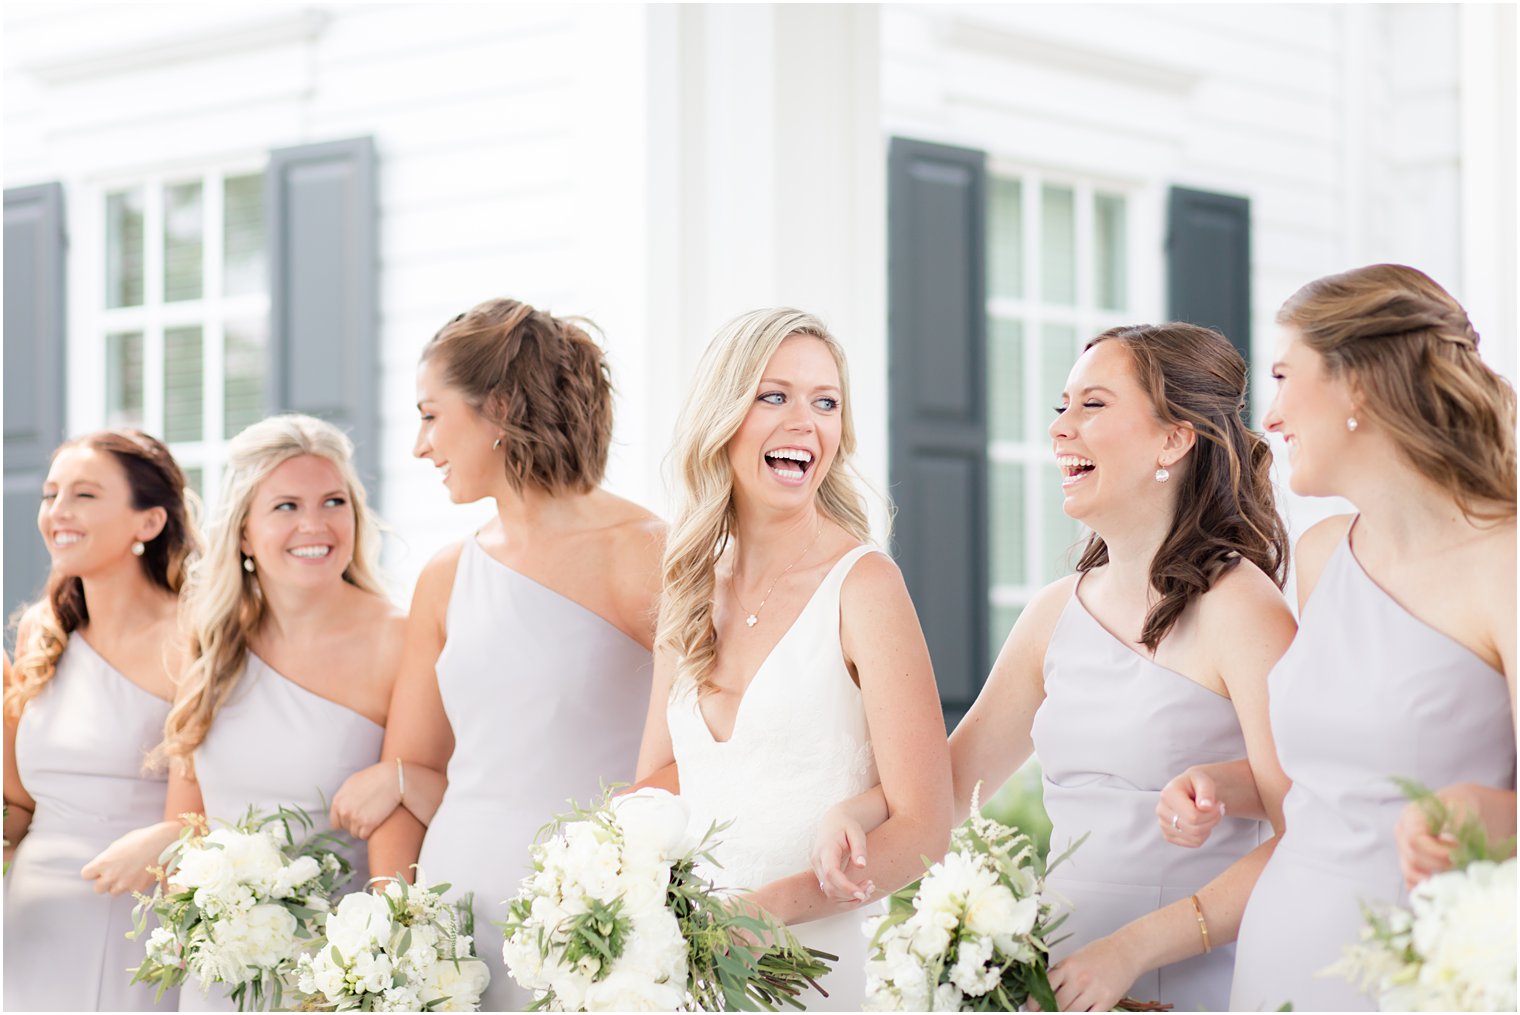 Candid photo of bride smiling at bridesmaids